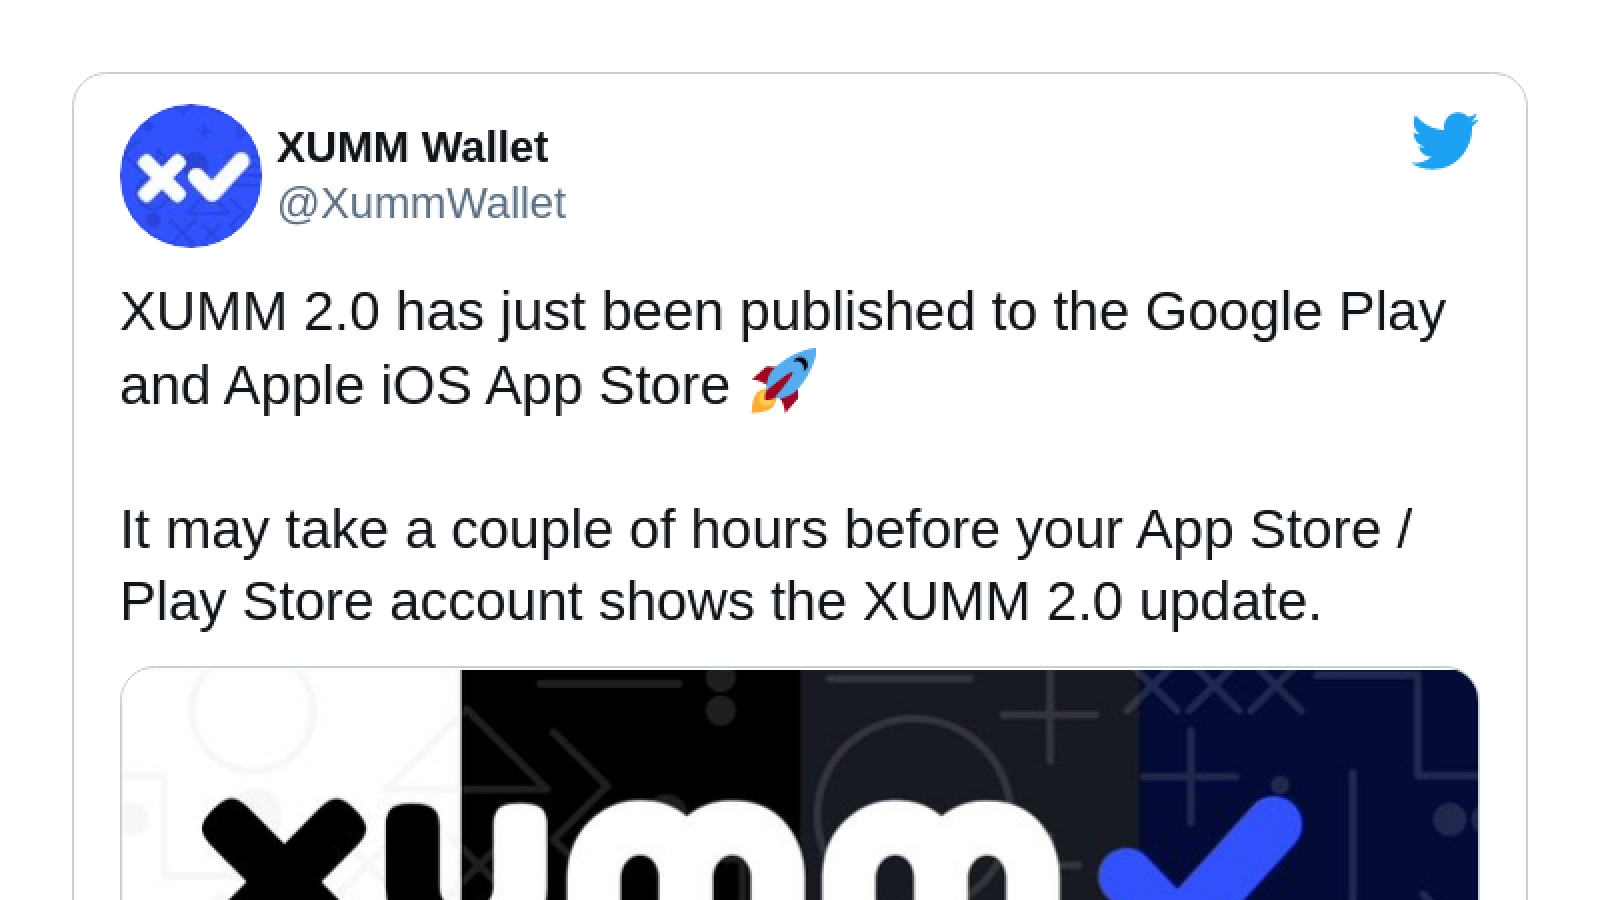 XUMM Wallet released in 2.0 version